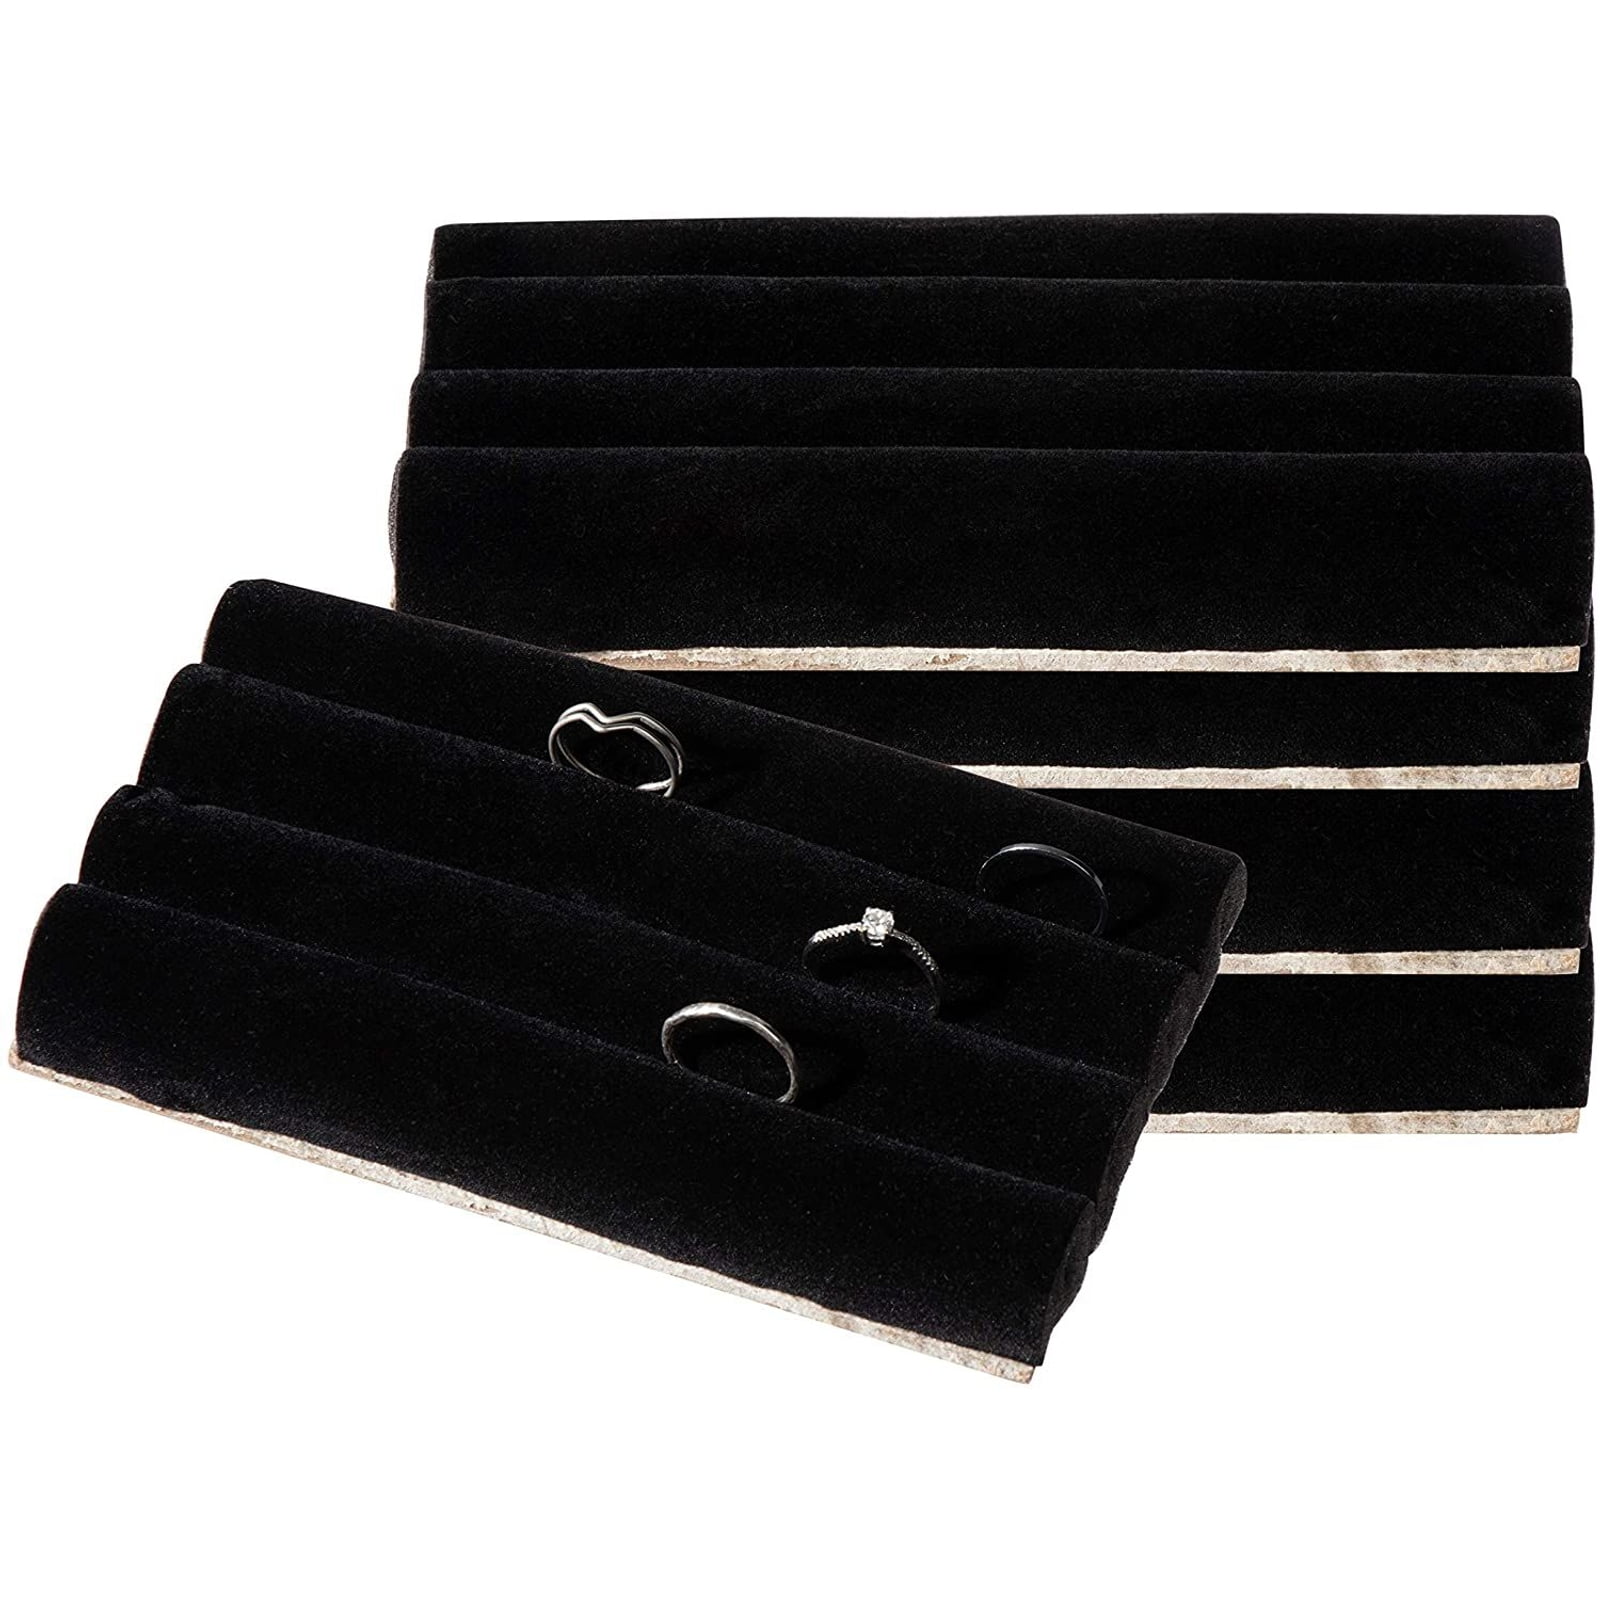 Jewelry Ring Display Tray Black Velvet Insert Box Holder Wood Case Organizer 